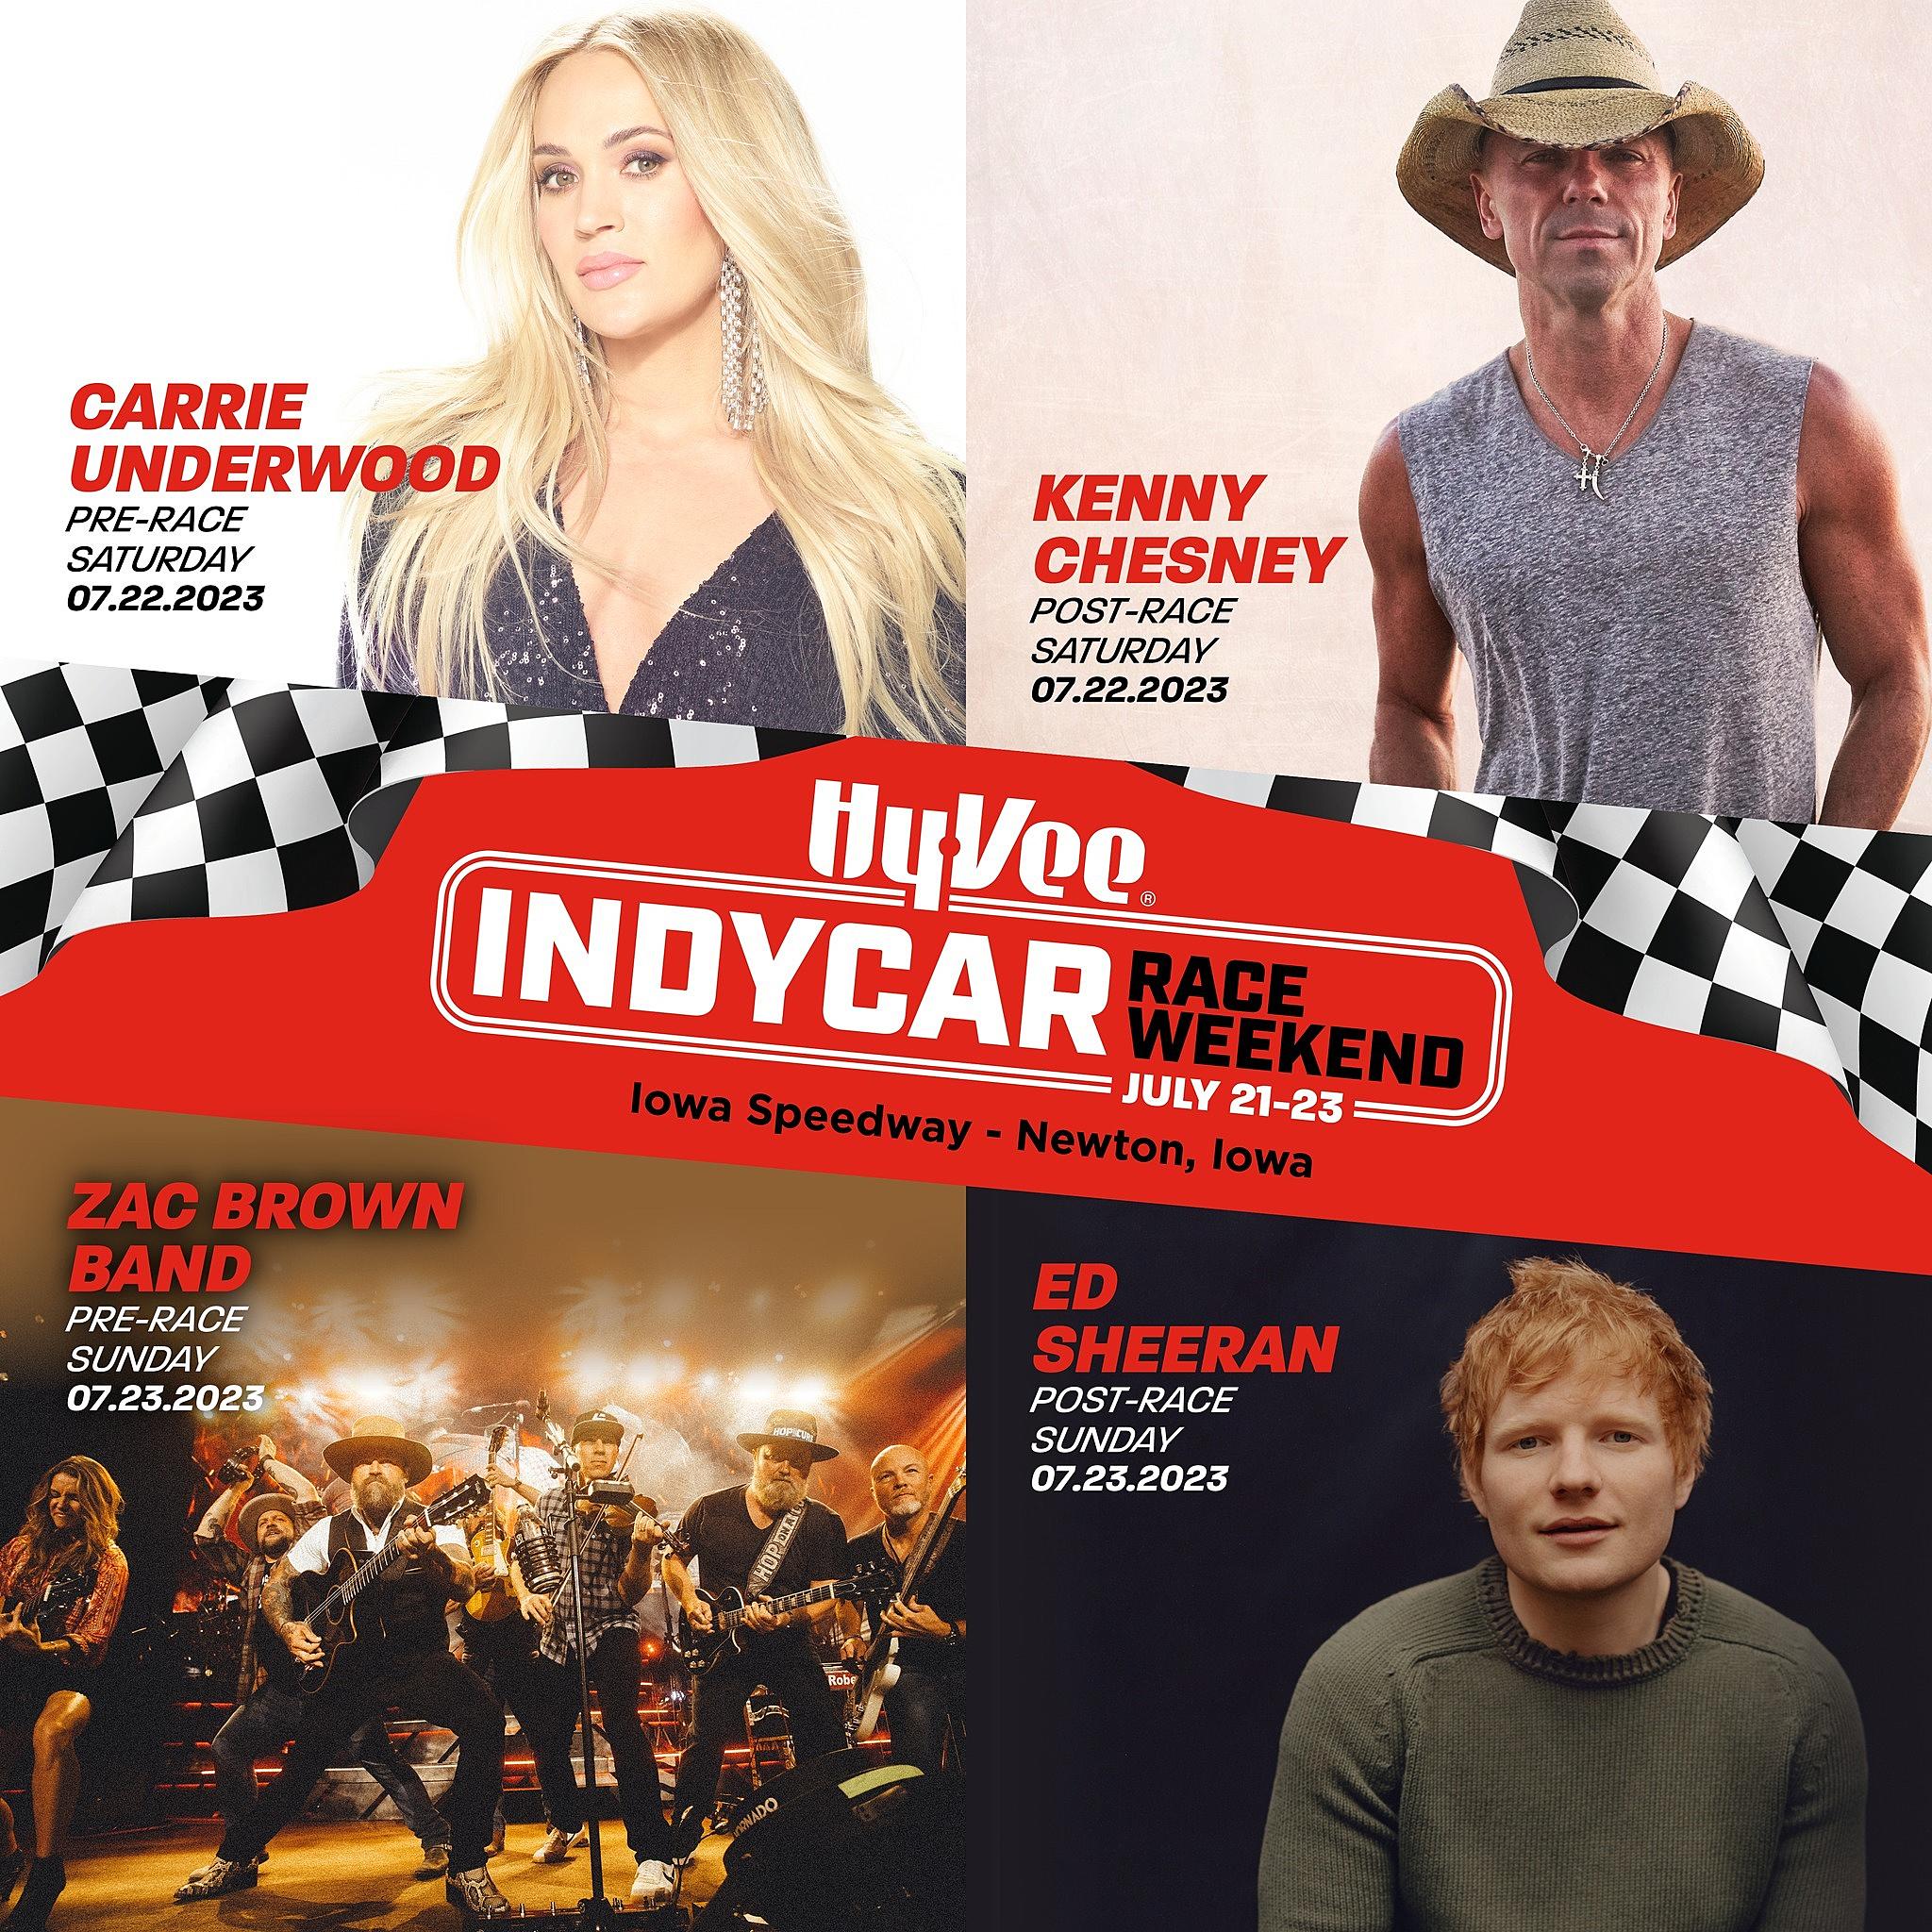 Carrie Underwood performs at Iowa Speedway during IndyCar weekend